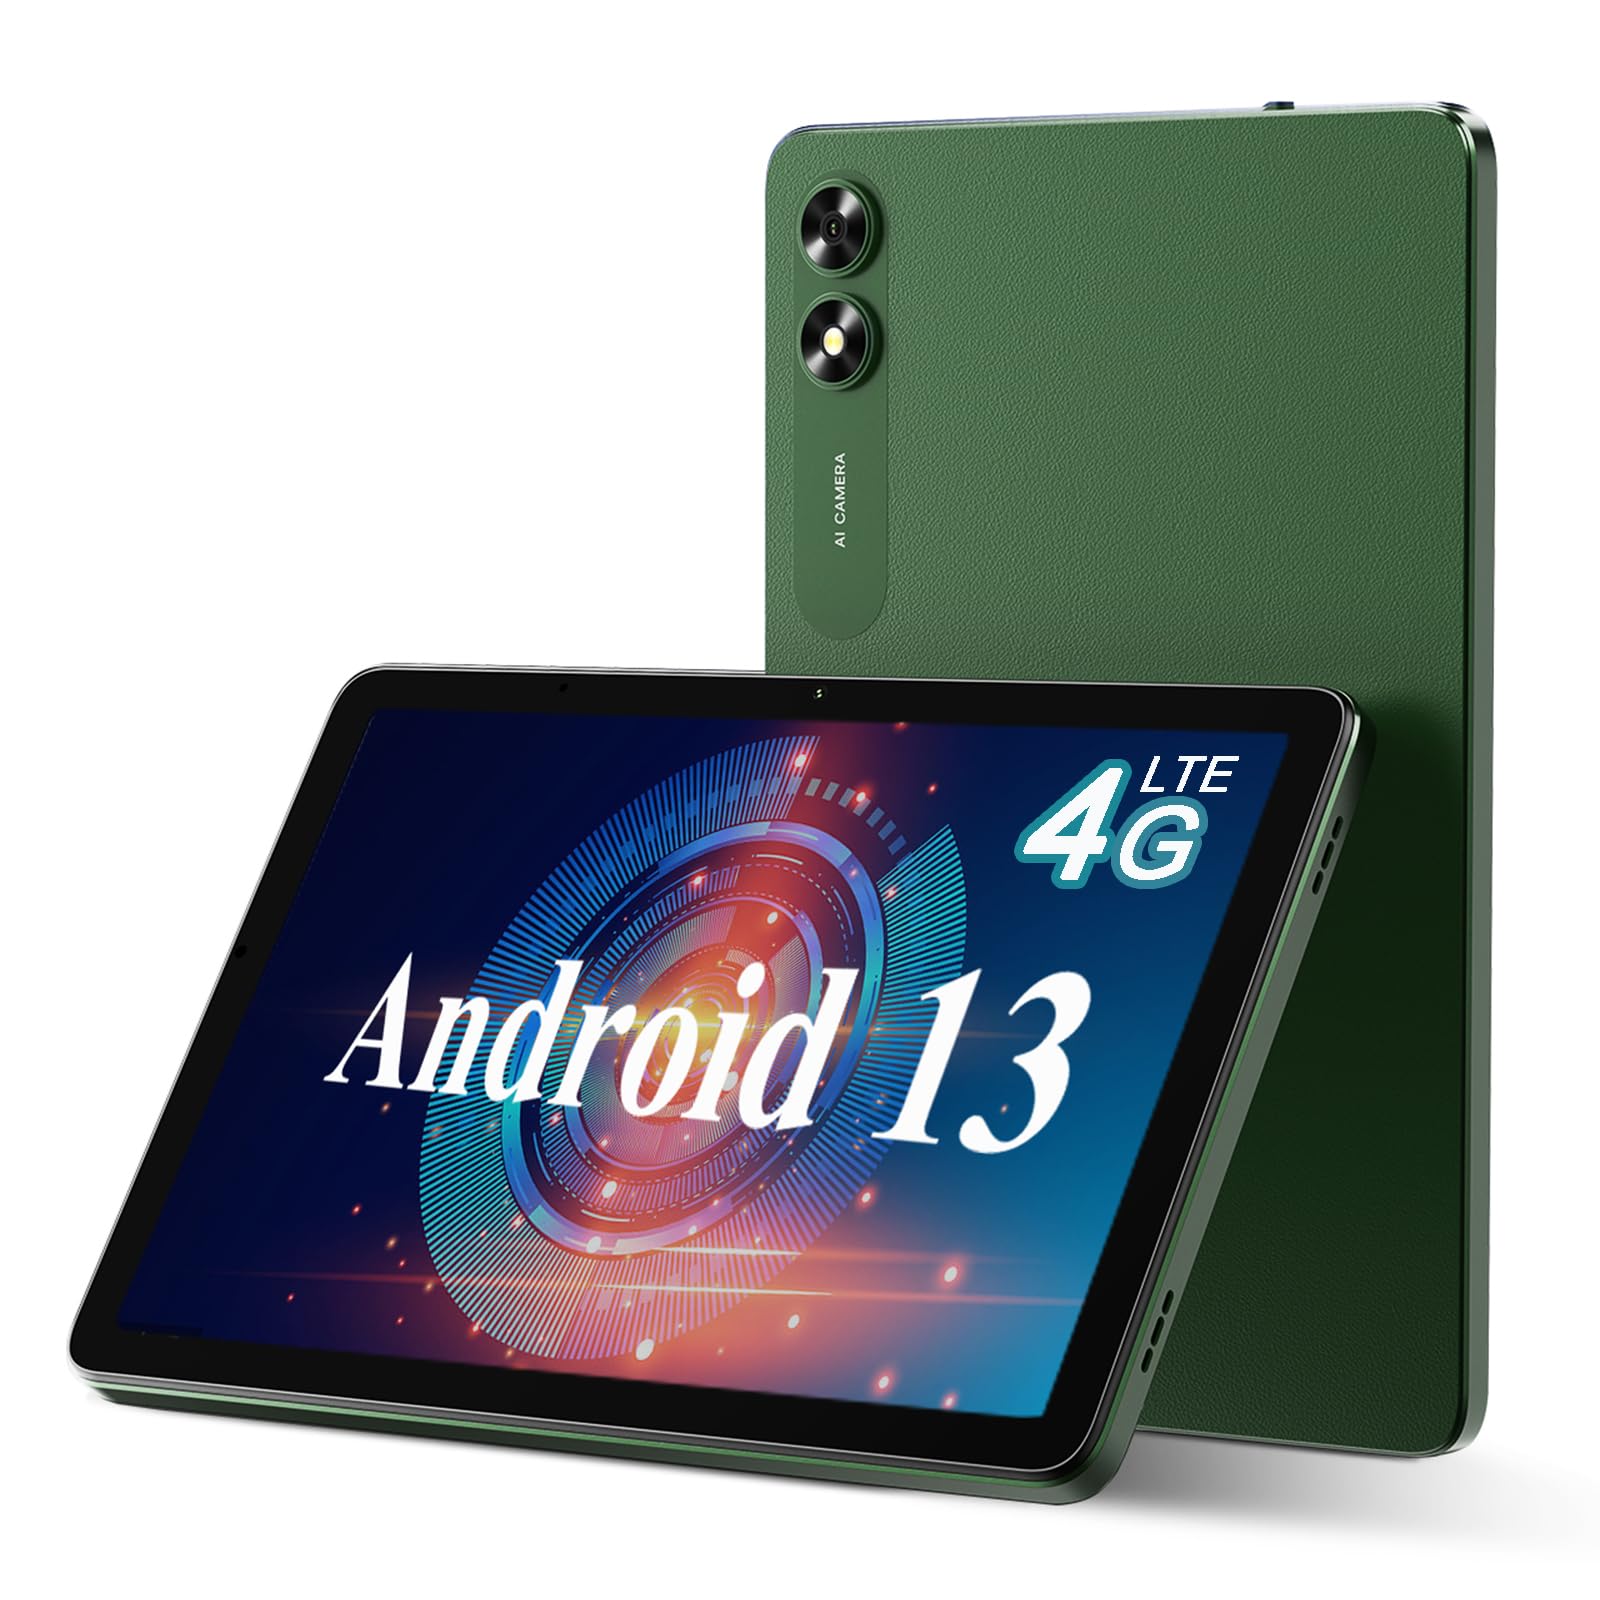 UMIDIgI g3 Tablet Pc, 101 inch Tablet g3 Tab 3gB +32gB Android 13 6000mAh up to 256gB MT8766 Quad-core 8MP Rear camera Face ID U